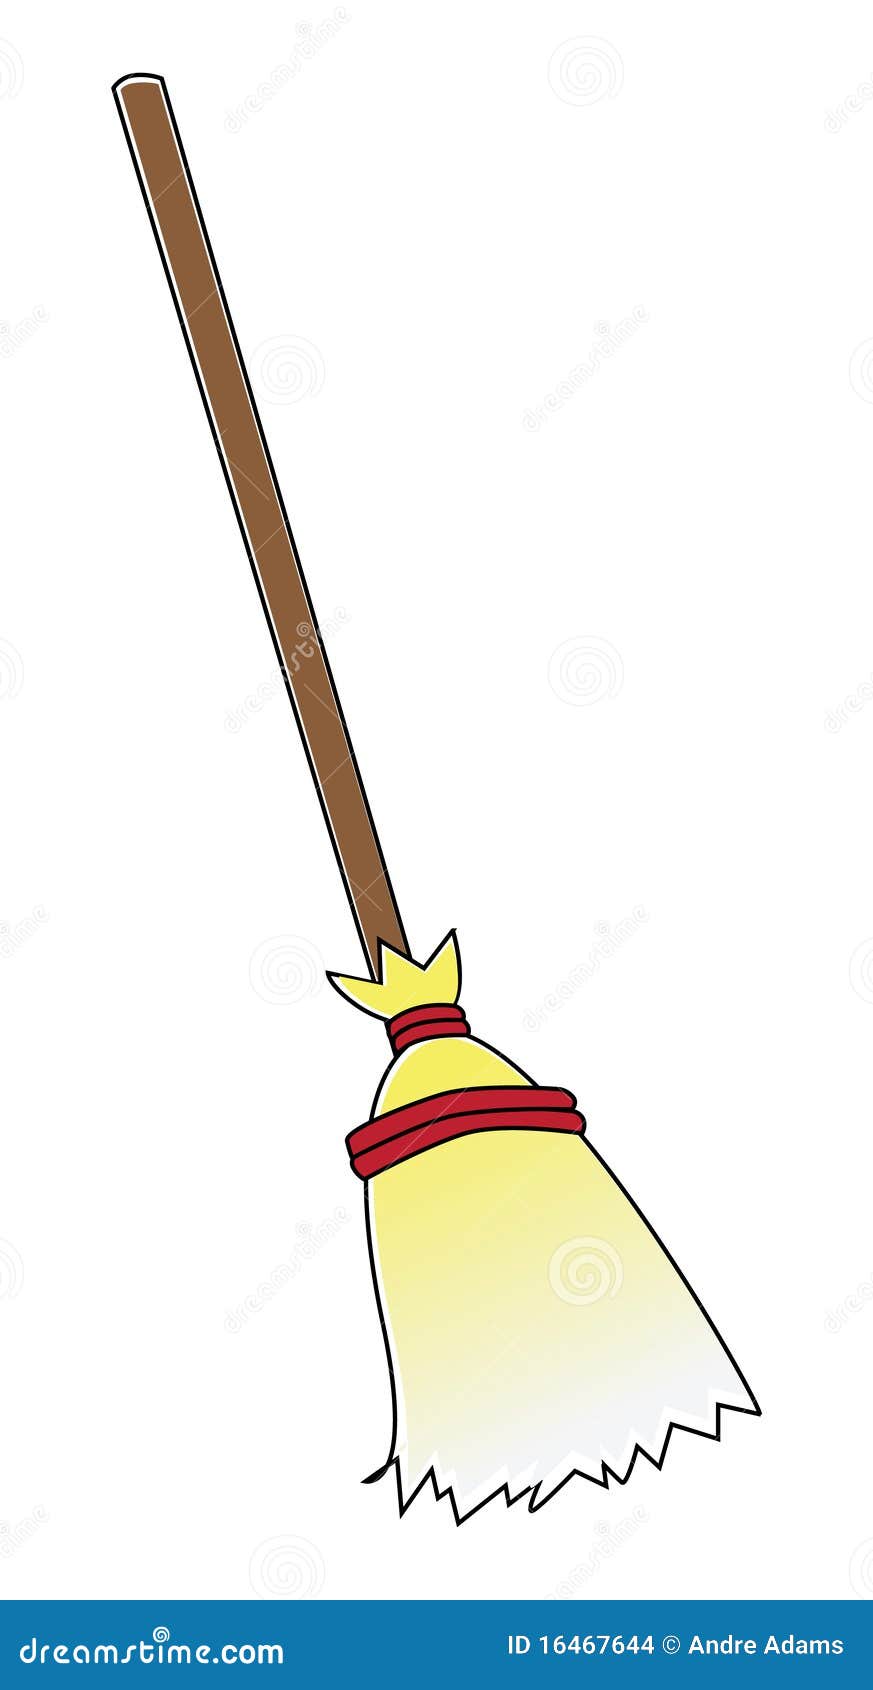 Broomstick stock illustration. Illustration of duty, clean - 16467644